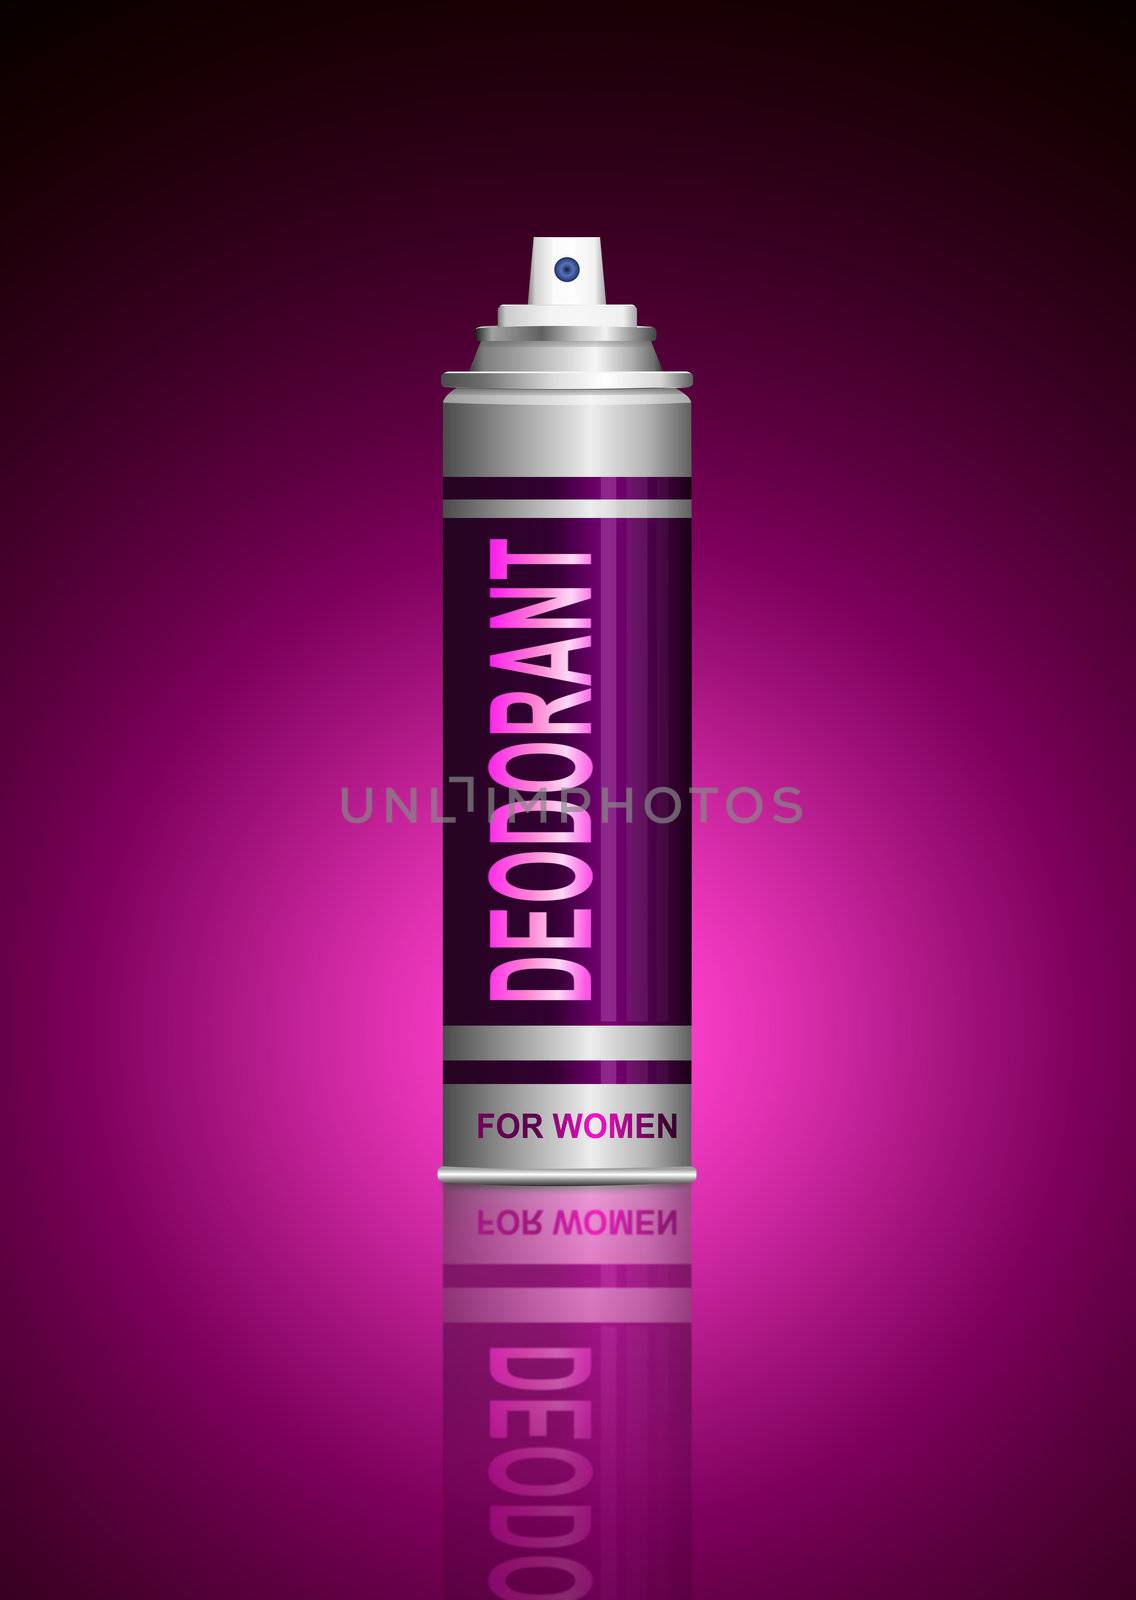 Deodorant. by 72soul